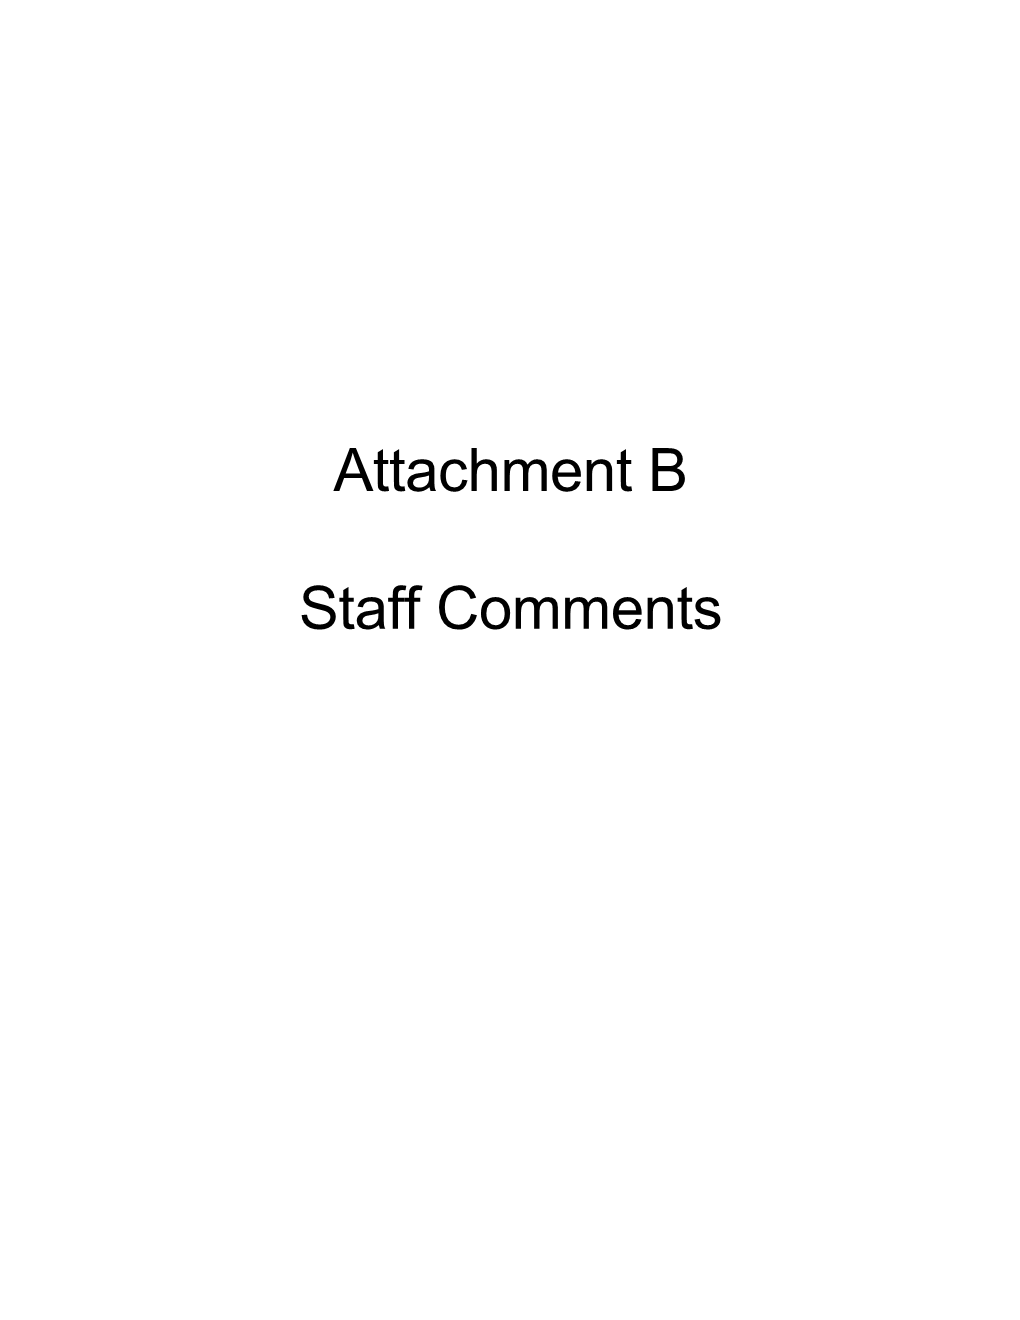 Attachment B Staff Comments